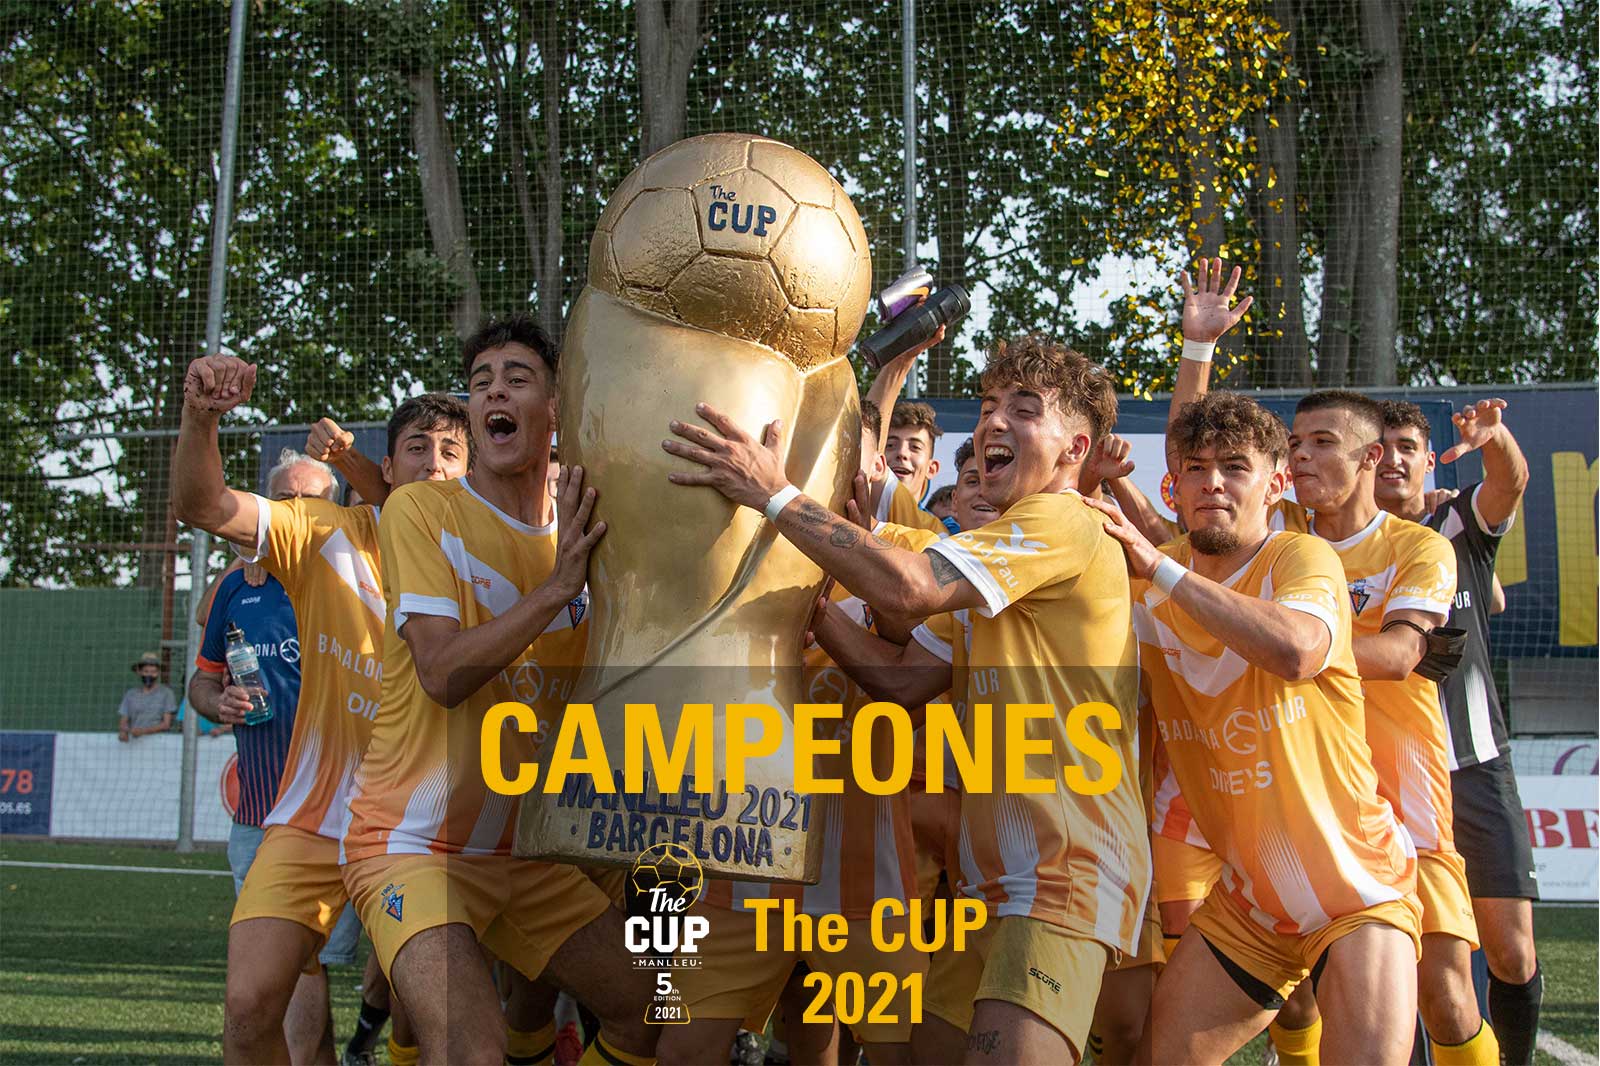 campeones-2021-thecup